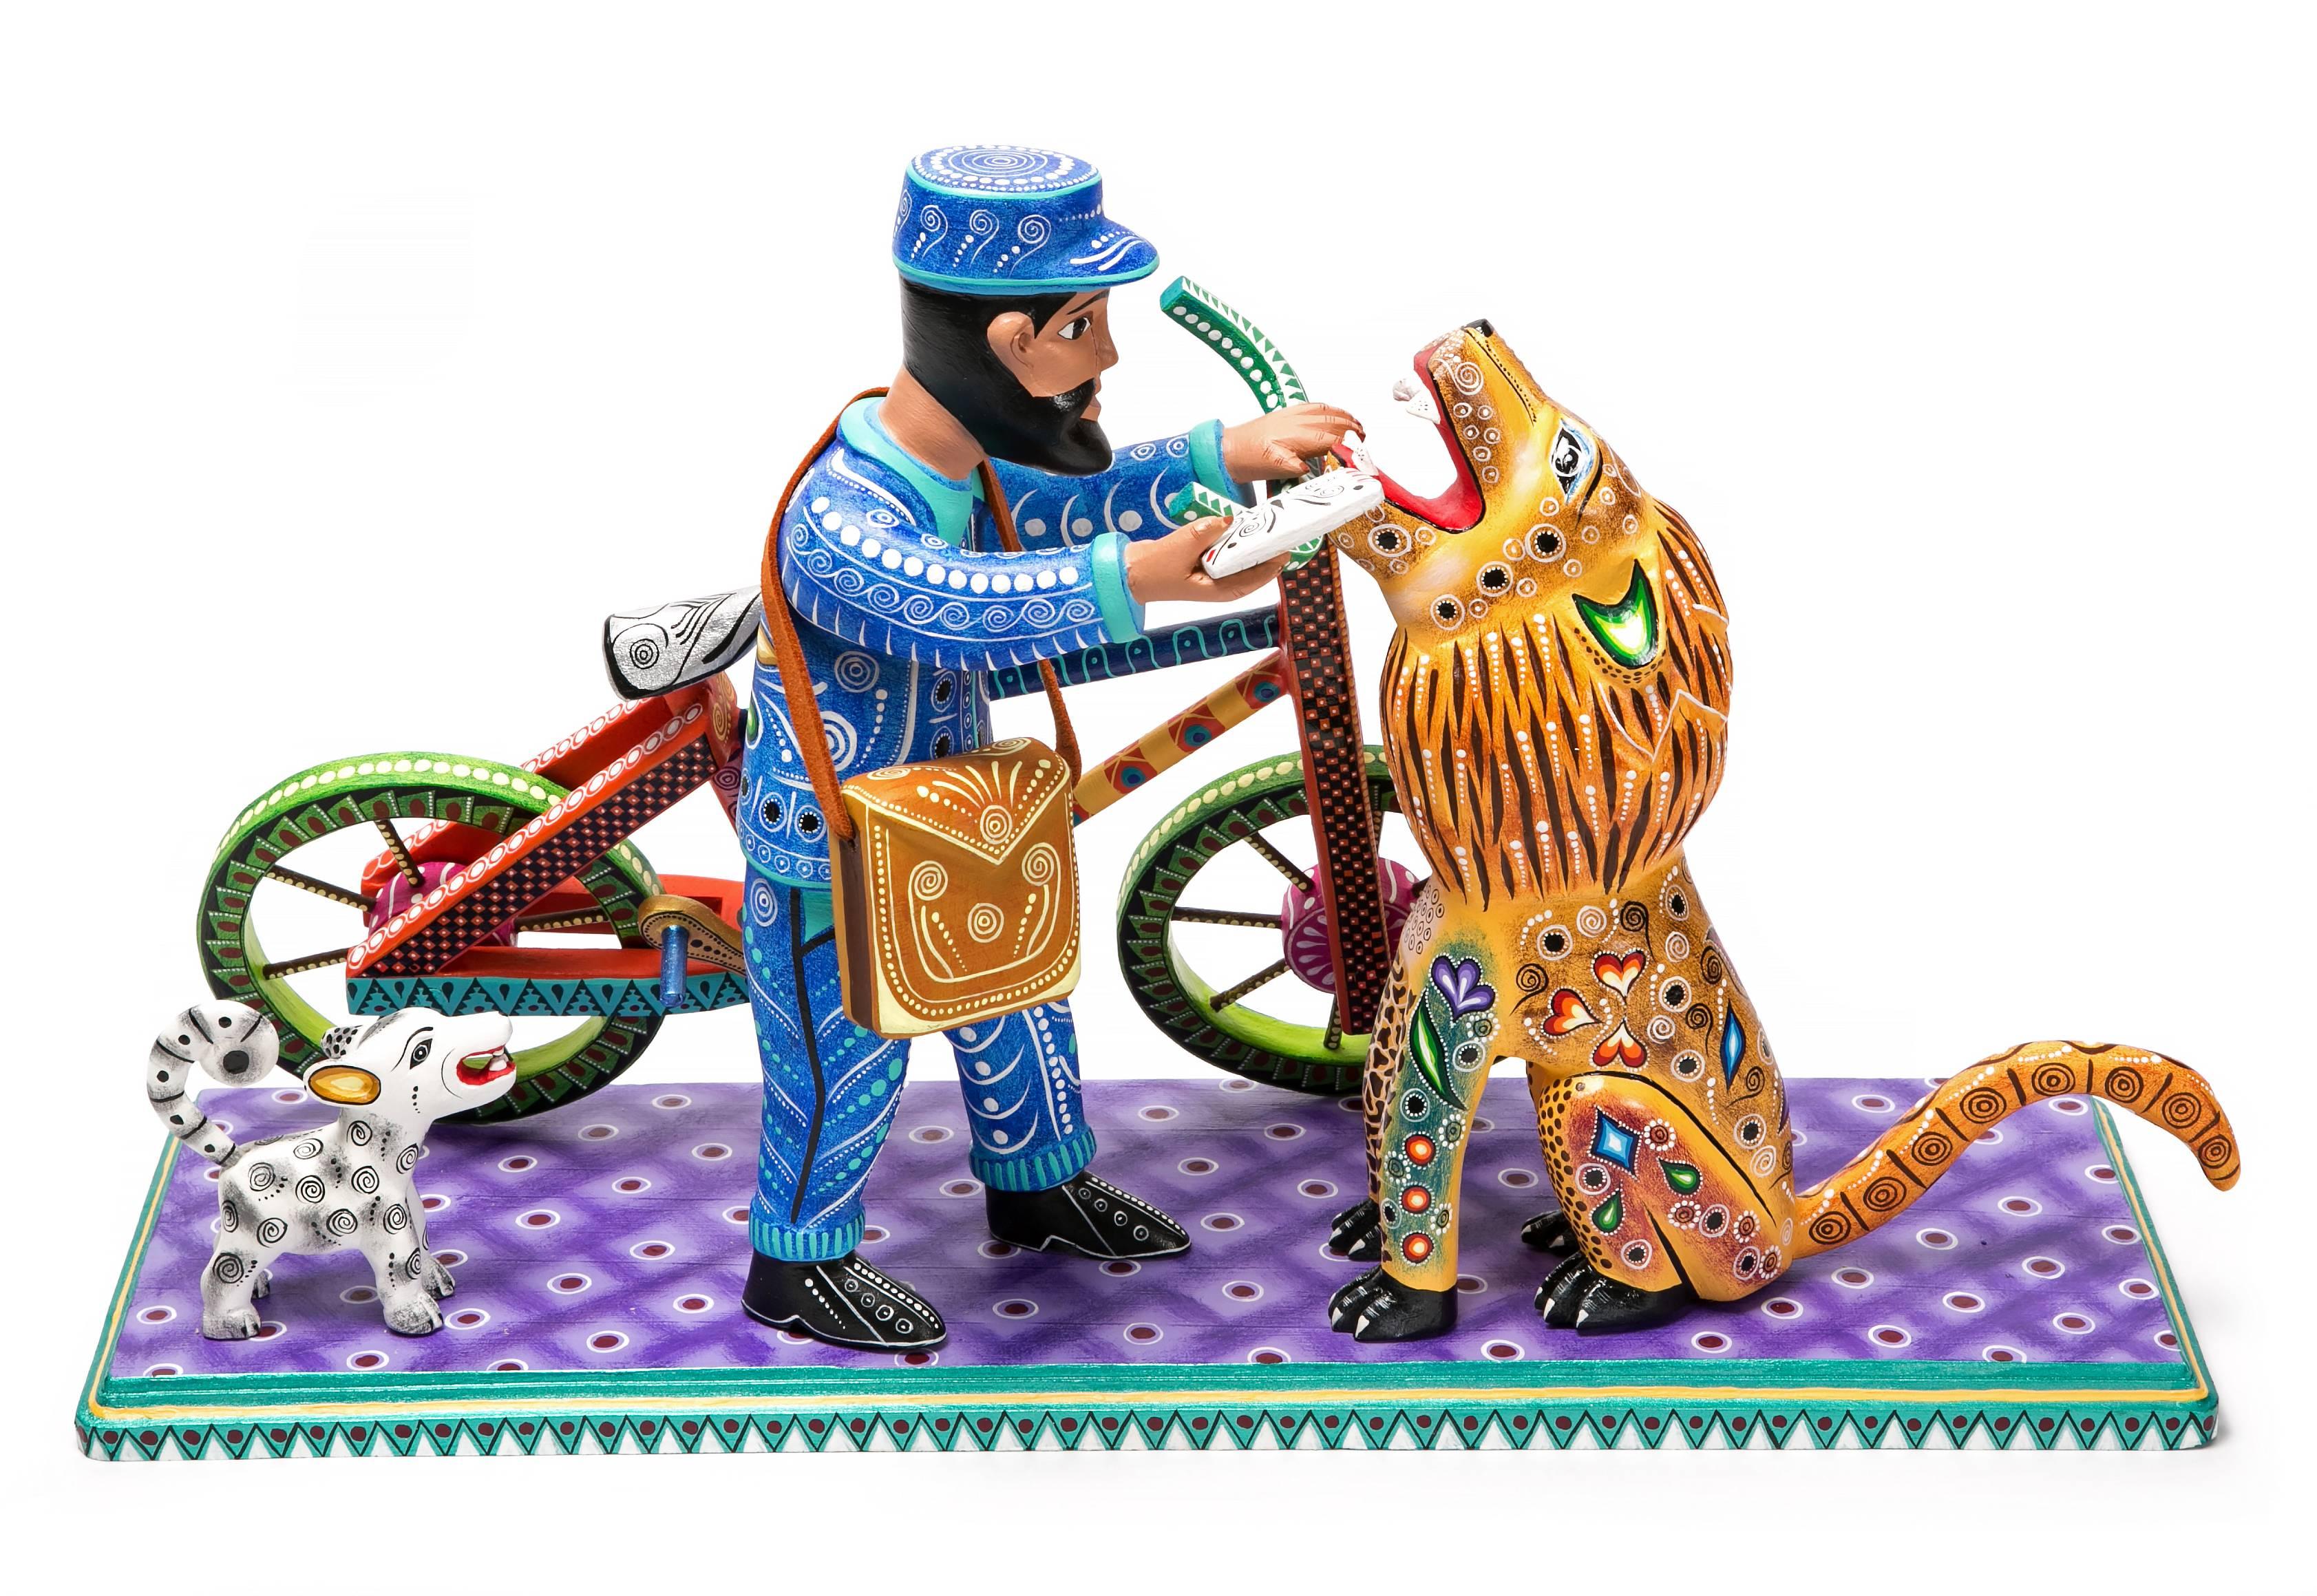 Agustin Cruz Tinoco Figurative Sculpture - 20'' Cartero / Wood carving Mexican Folk Art Sculpture